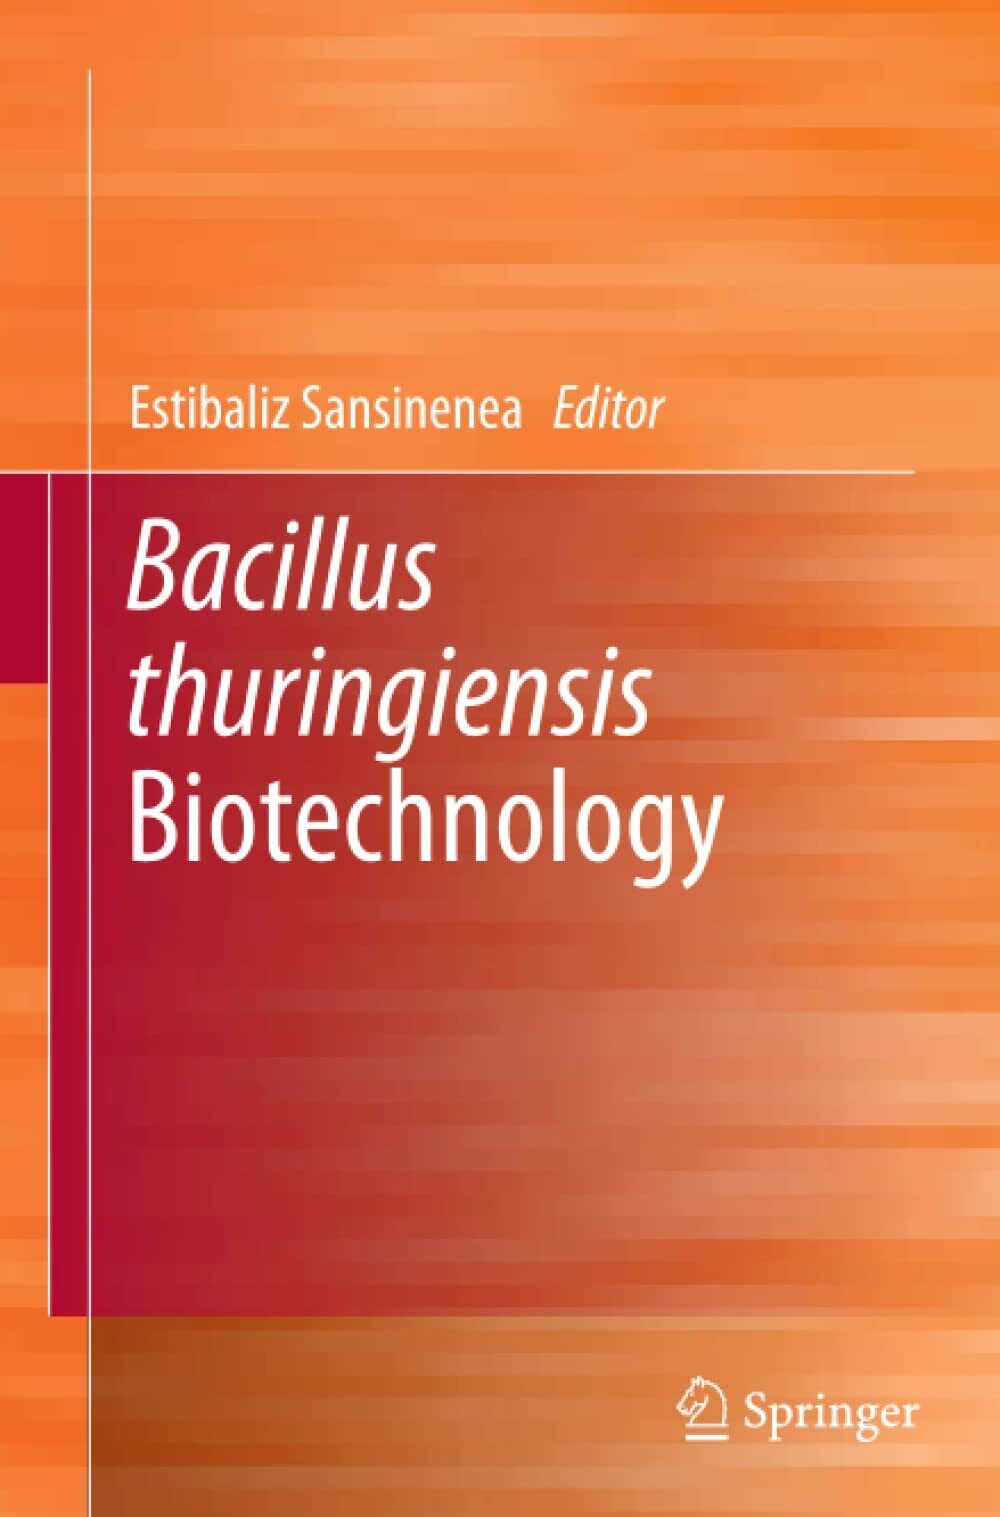 Bacillus thuringiensis Biotechnology - Estibaliz Sansinenea - Springer, 2014